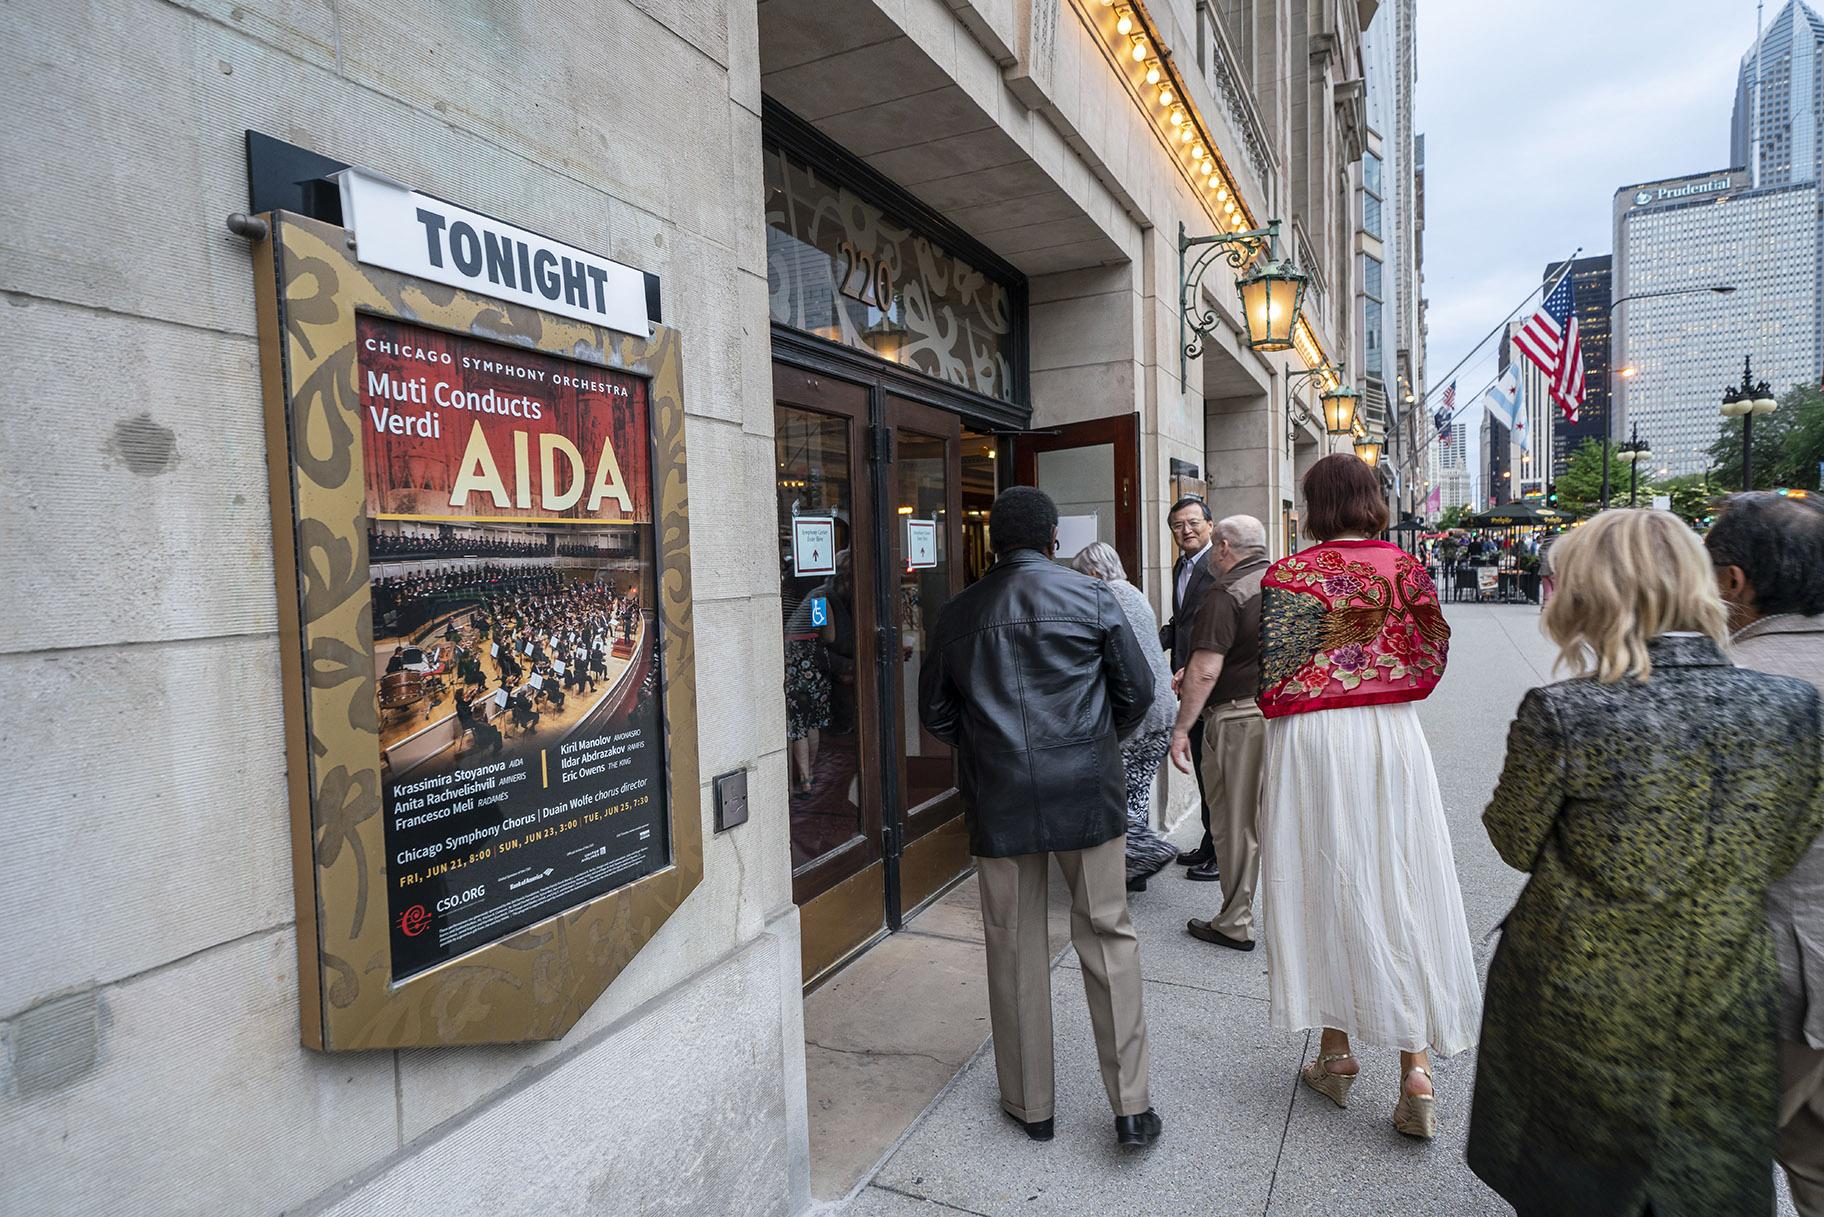 Audience members enter Symphony Center on opening night of Verdi’s “Aida” on June 21, 2019. (Credit: Todd Rosenberg)